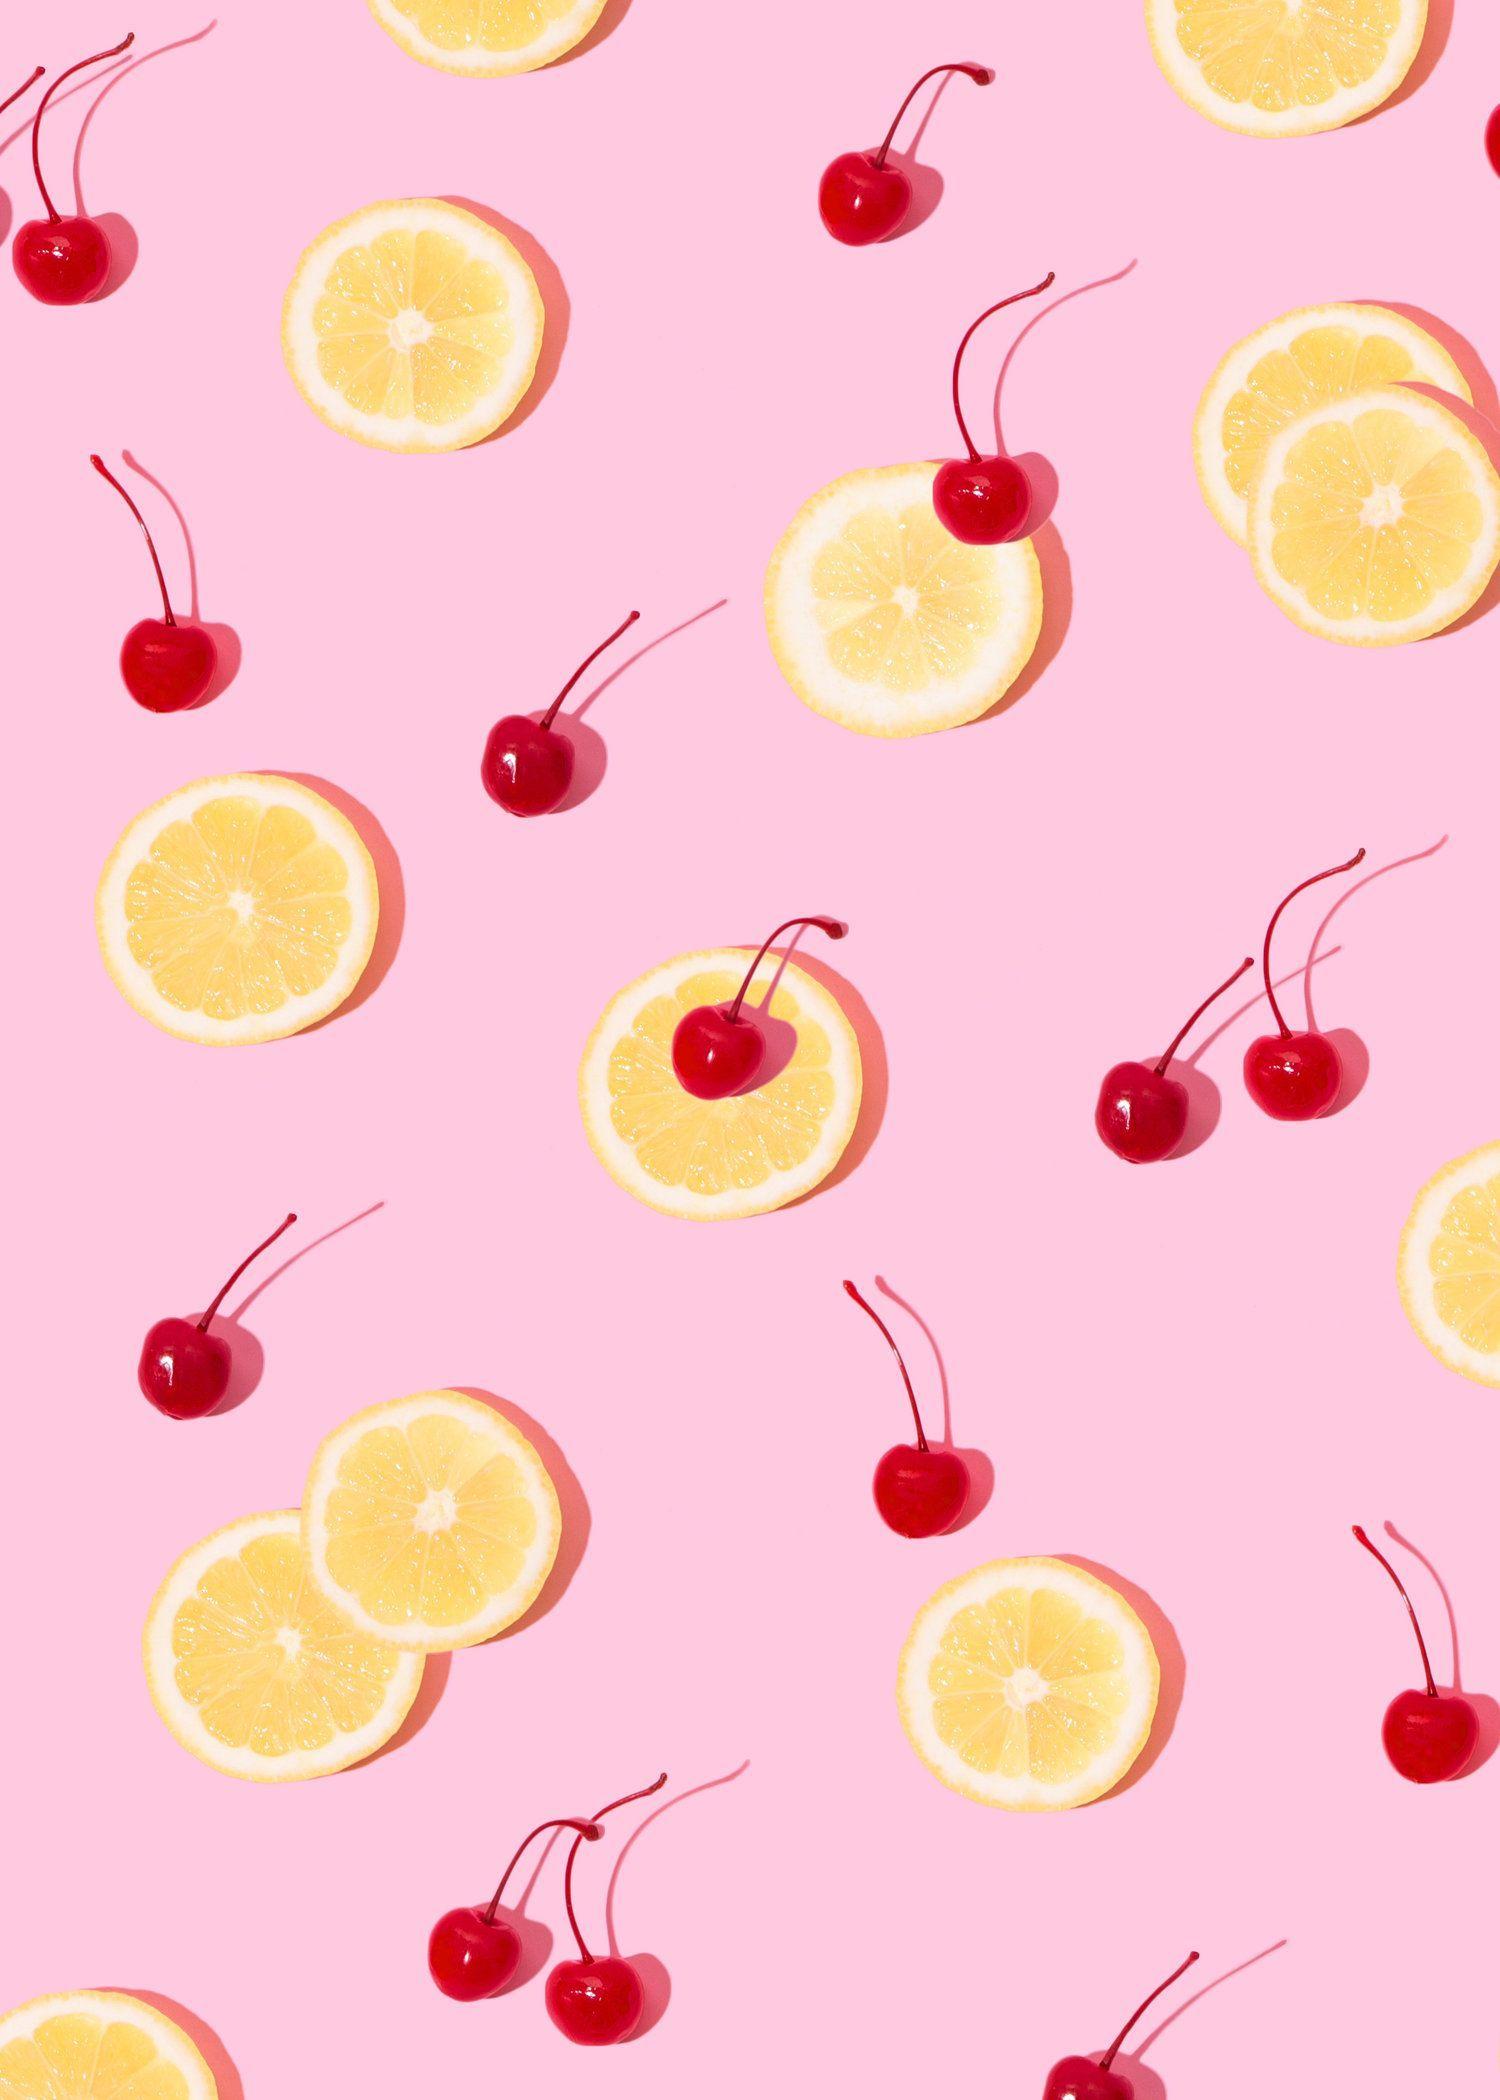 Cherry Lemonade // Wallpaper Download. Cherry lemonade, Summer